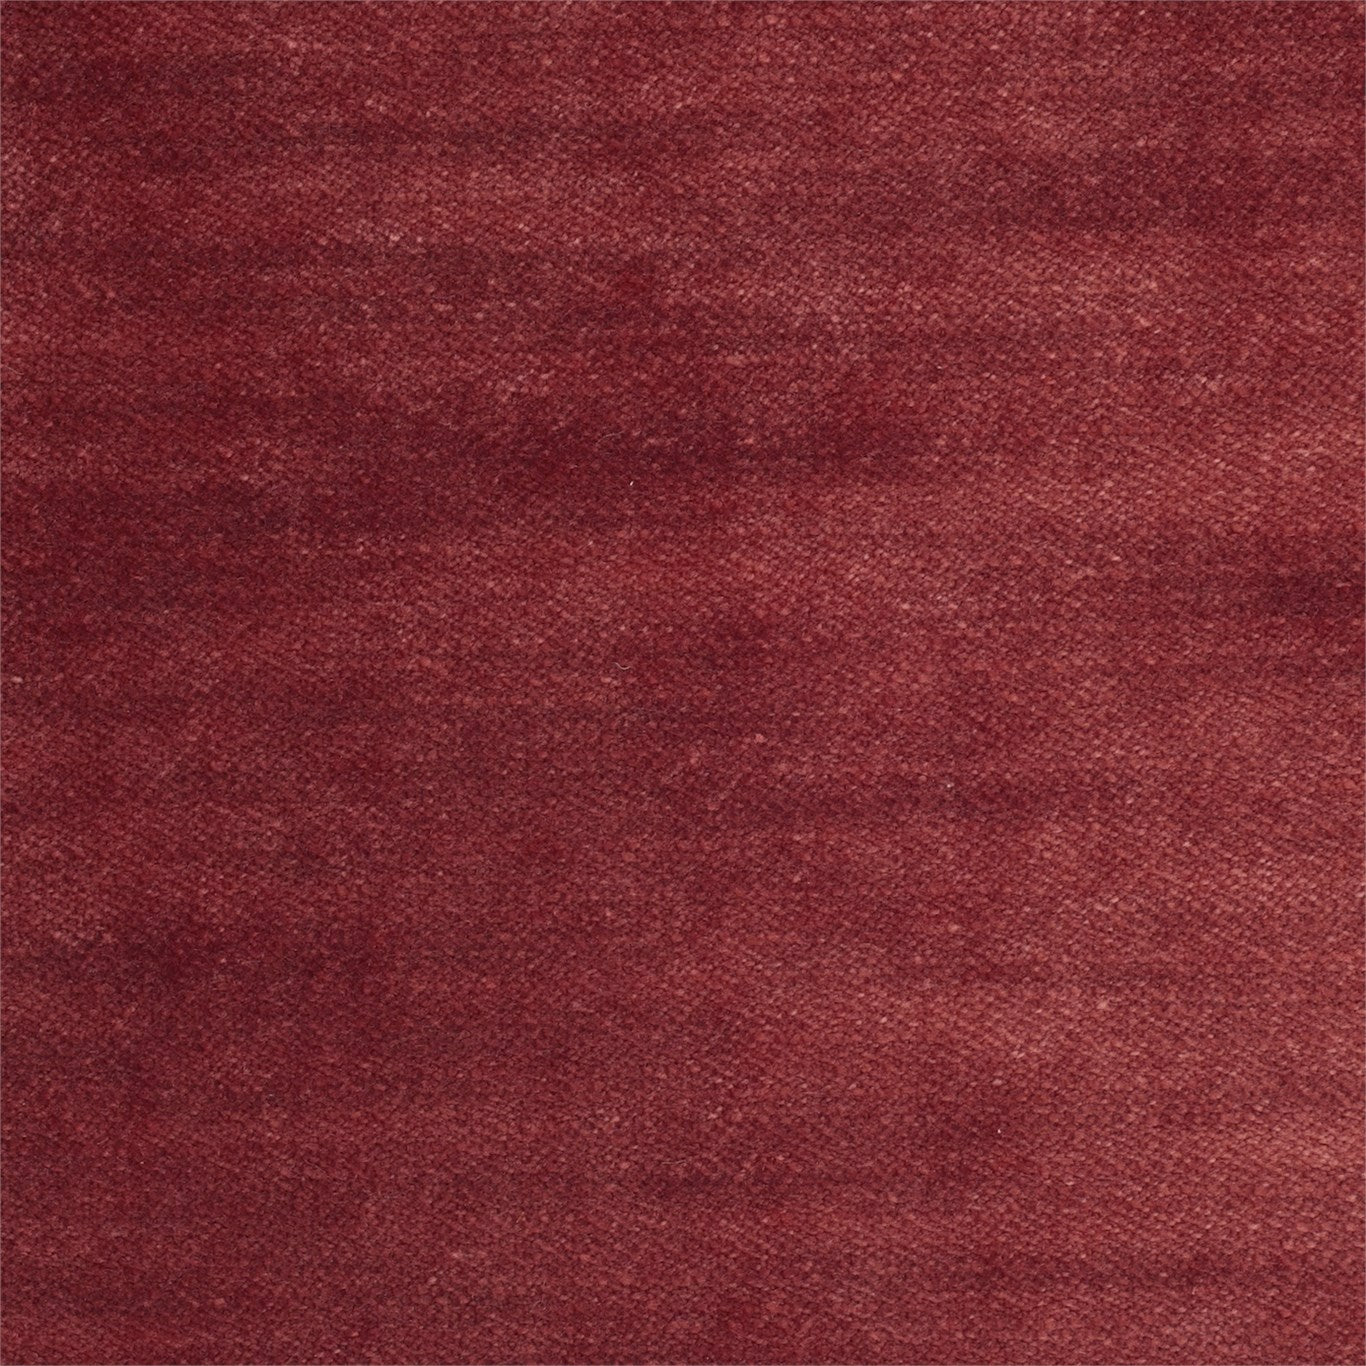 Chatham Fabric by Sanderson - DCHA240159 - Brick